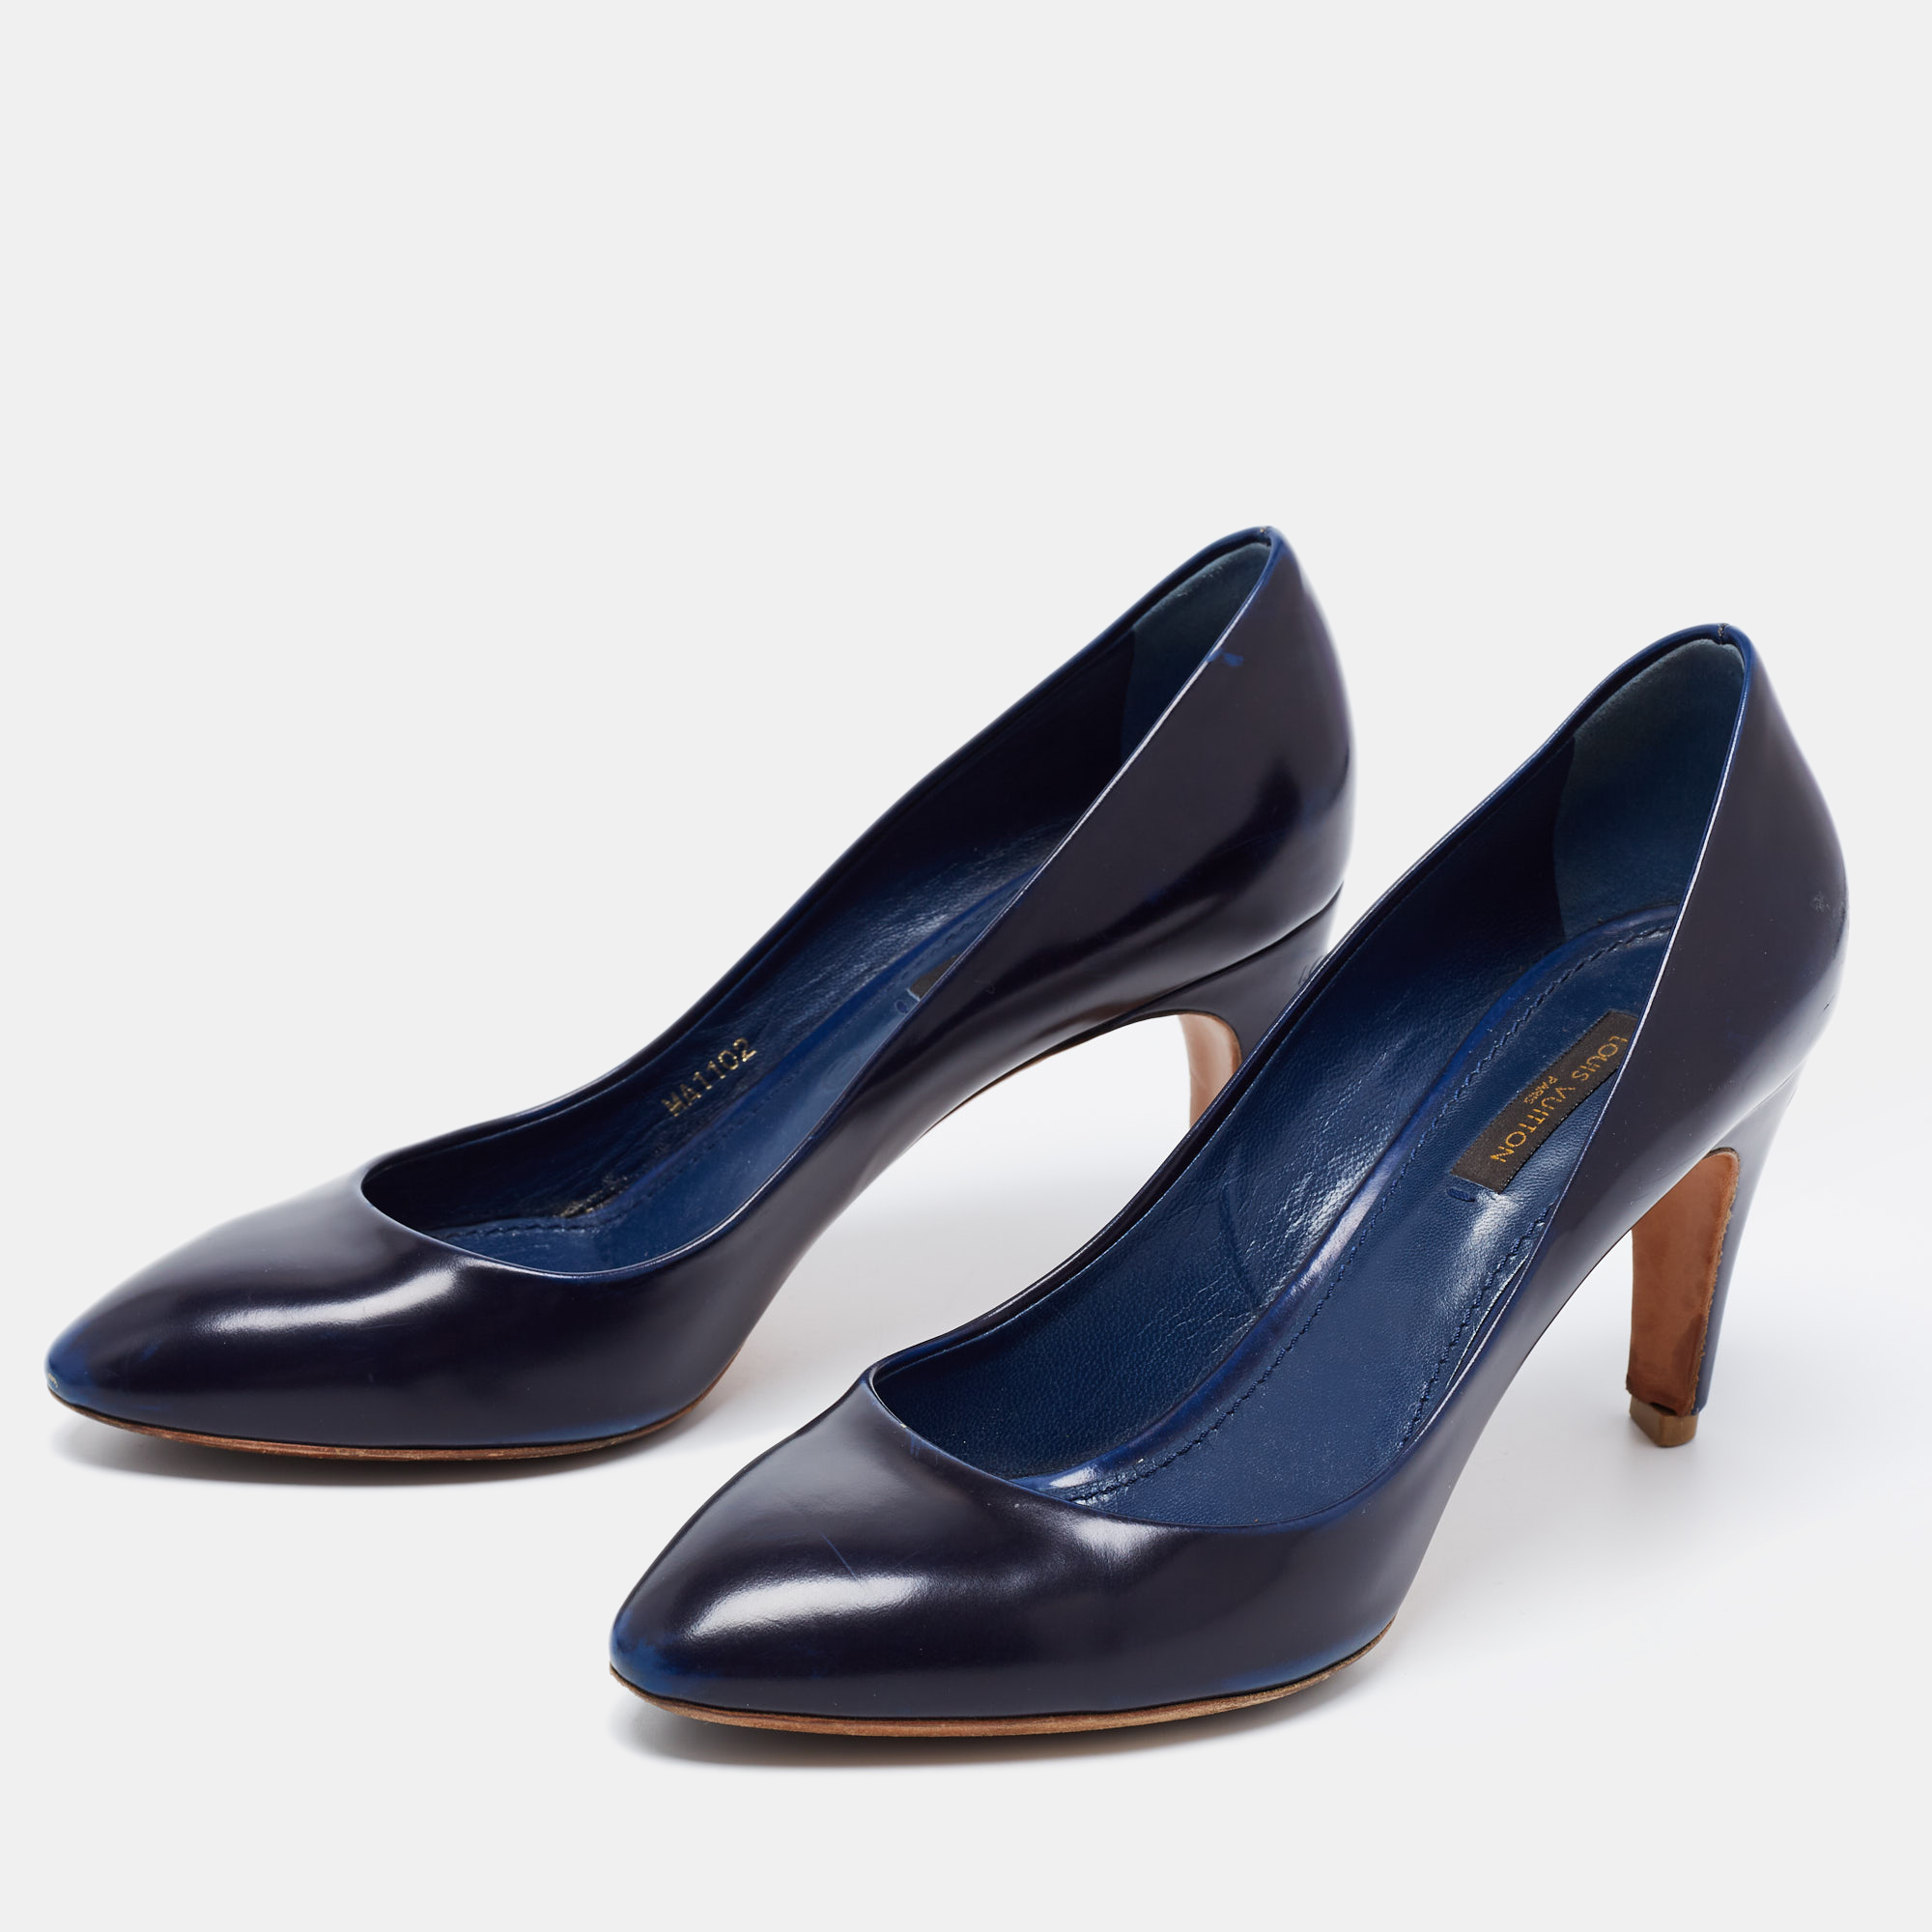 Louis Vuitton heels size 38